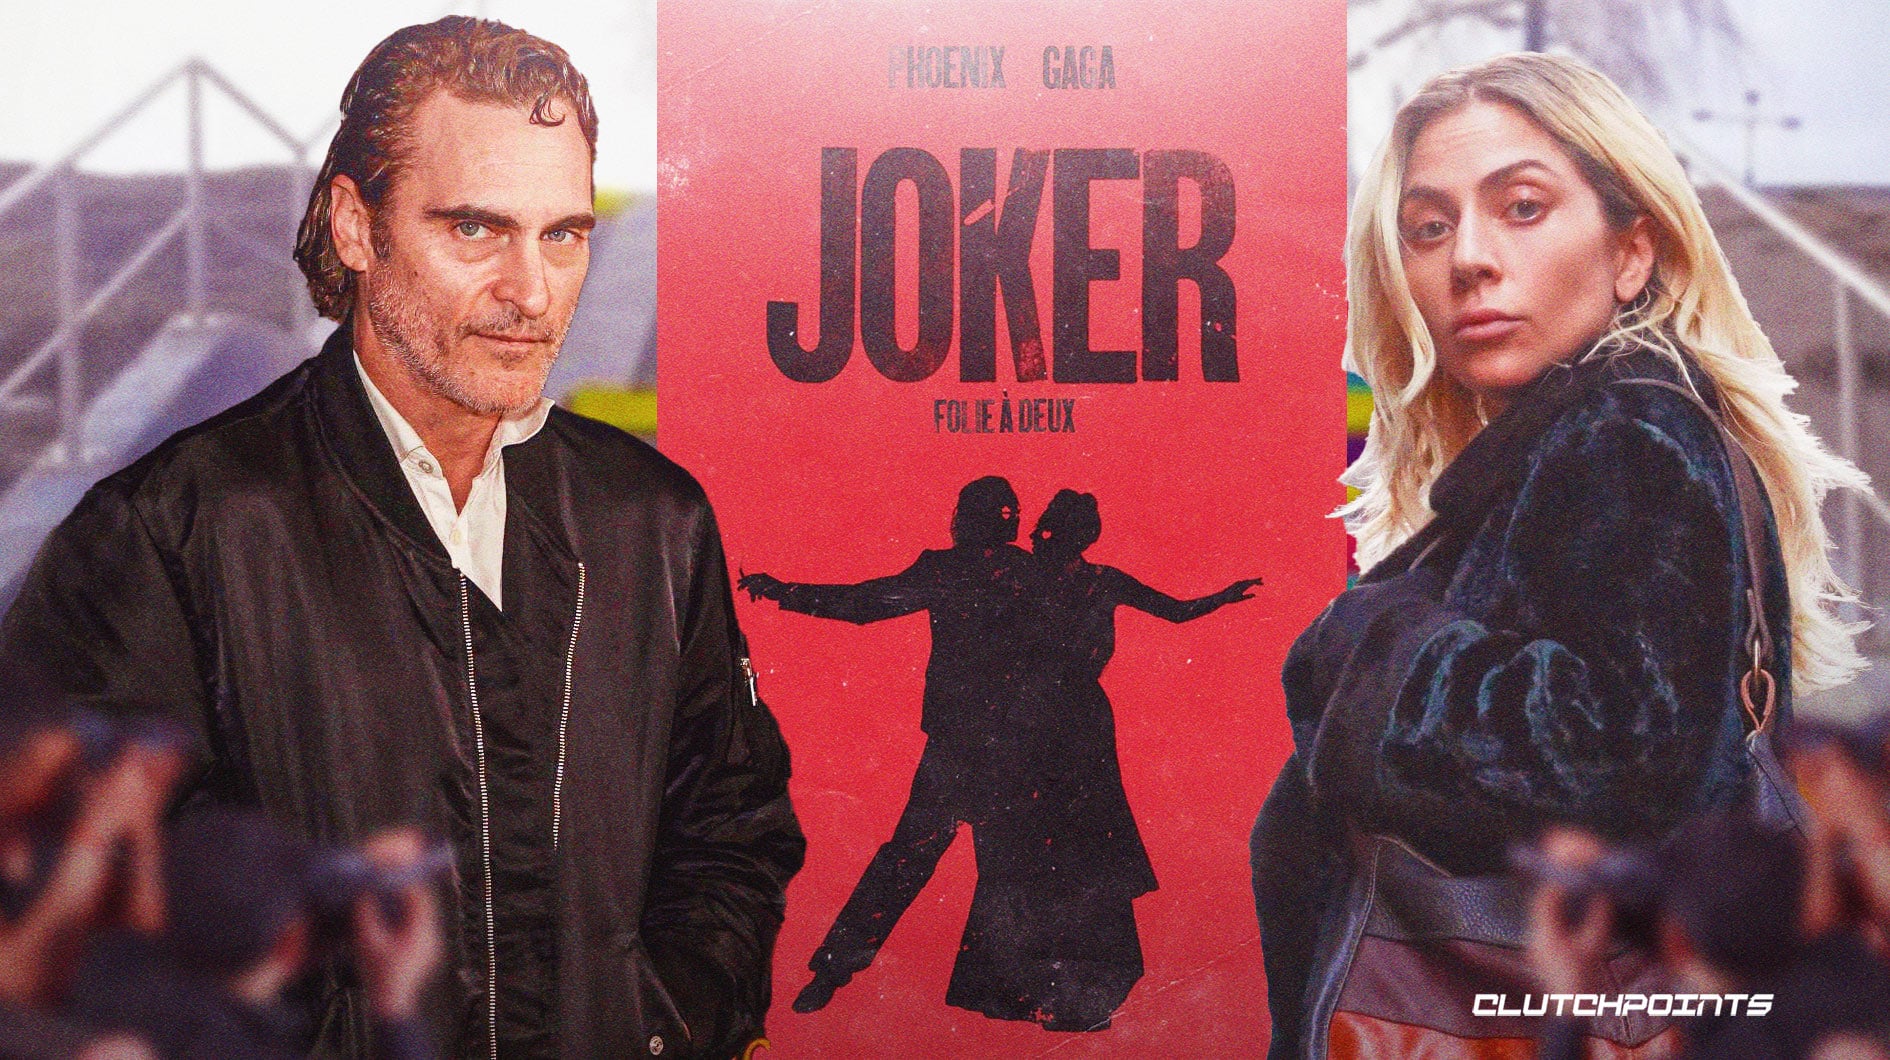 Joker sequel poster (Folie à Deux), Joaquin Phoenix and Lady Gaga in front of Joker steps.